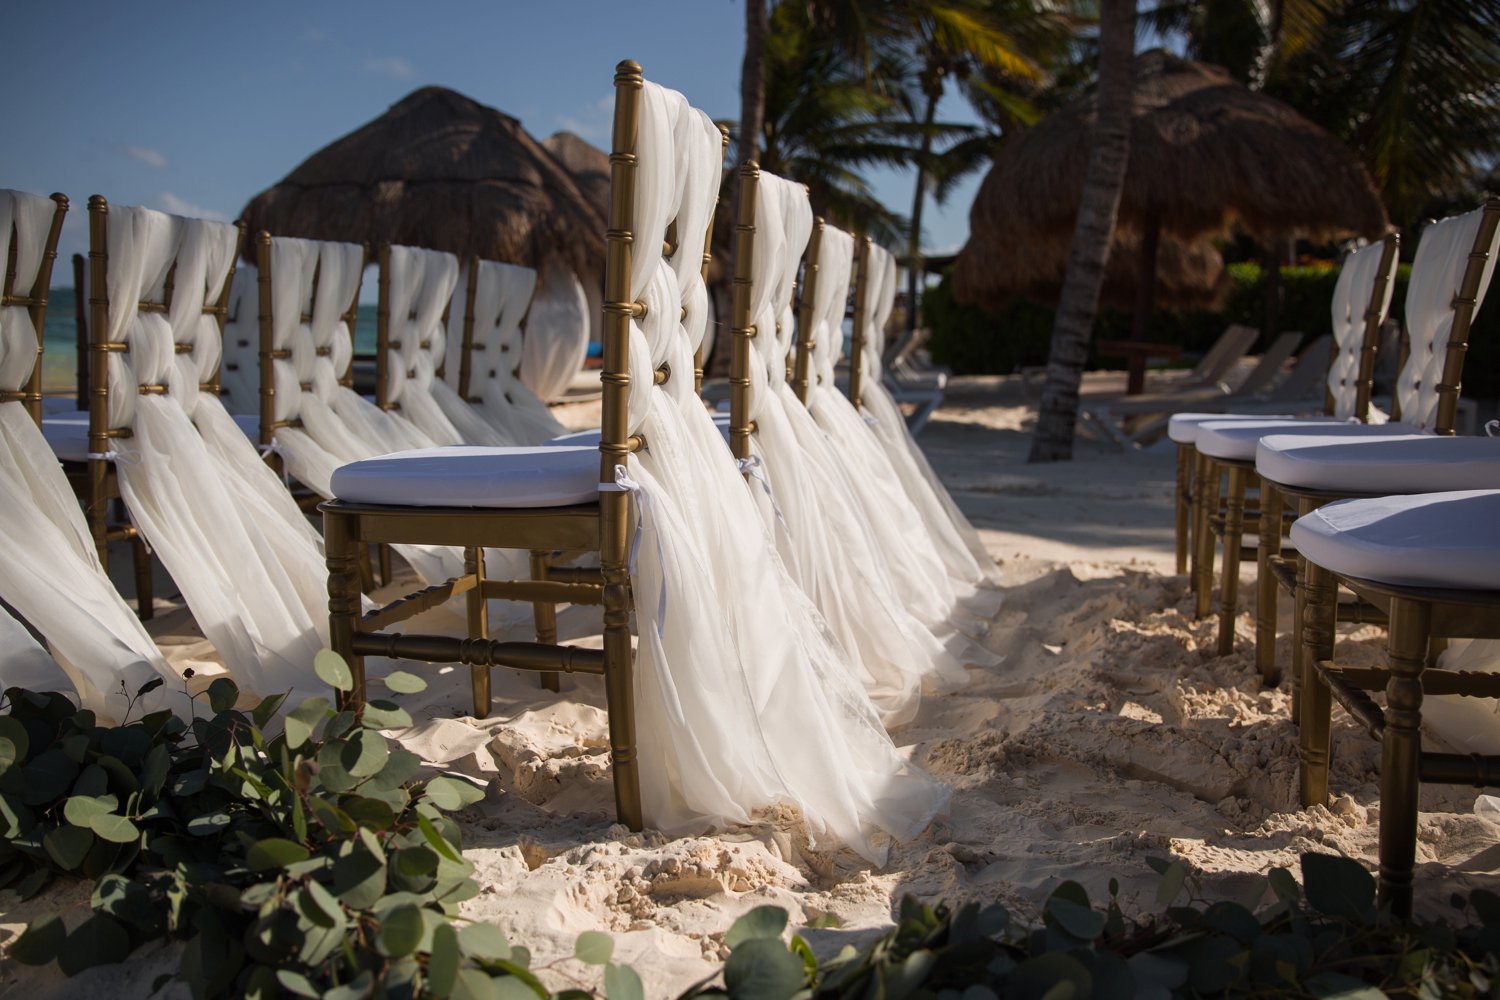  images by feliciathephotographer.com | destination wedding photographer | mexico | tropical | fiji | venue | azul beach resort | riviera maya | ceremony | white linen chairs | Beachwood aisle | candles | sand | eucalyptus |